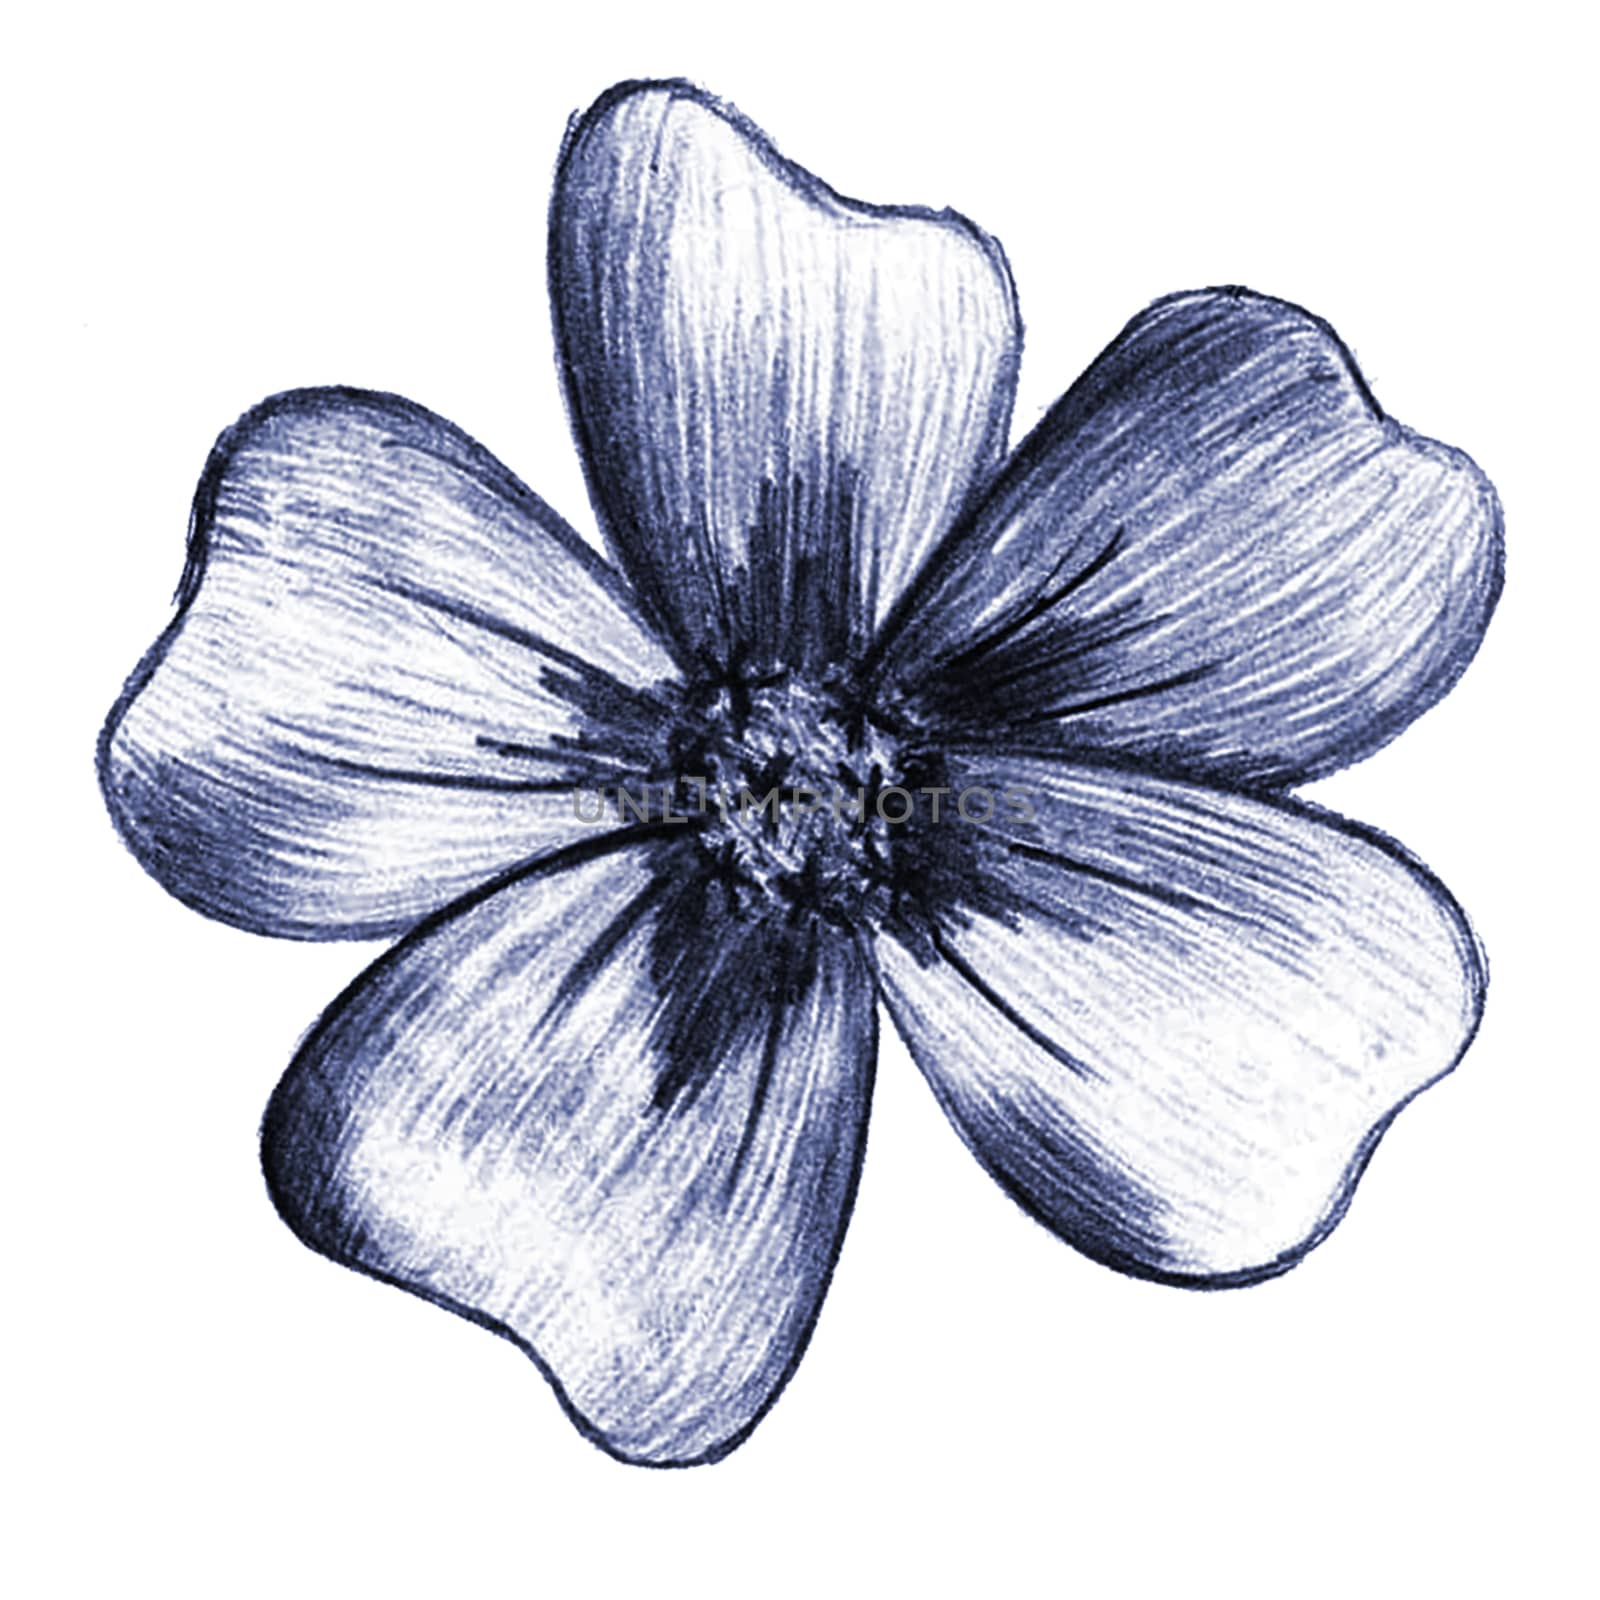 Blue Hand-Drawn Isolated Flower. Thin-leaved Marigolds Sketch. by Rina_Dozornaya